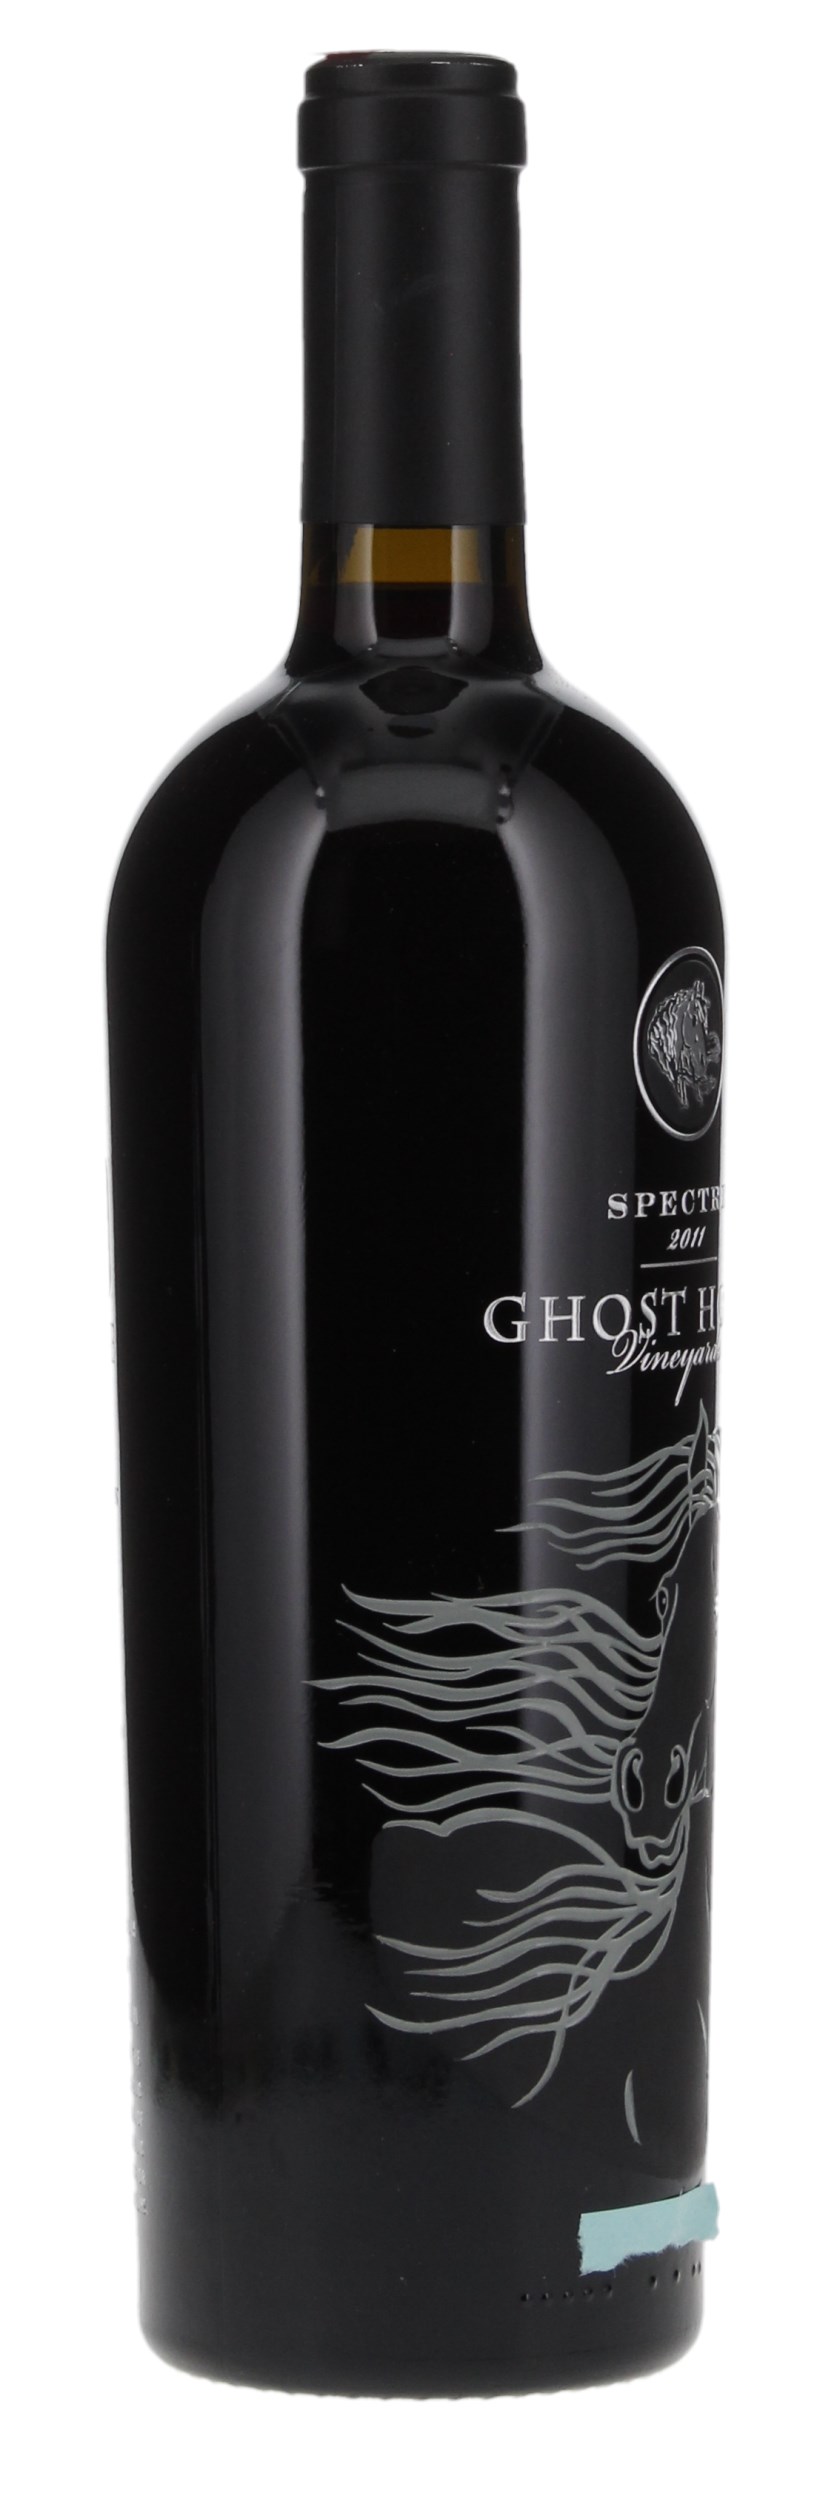 2011 Ghost Horse Vineyard Spectre Cabernet Sauvignon, 750ml